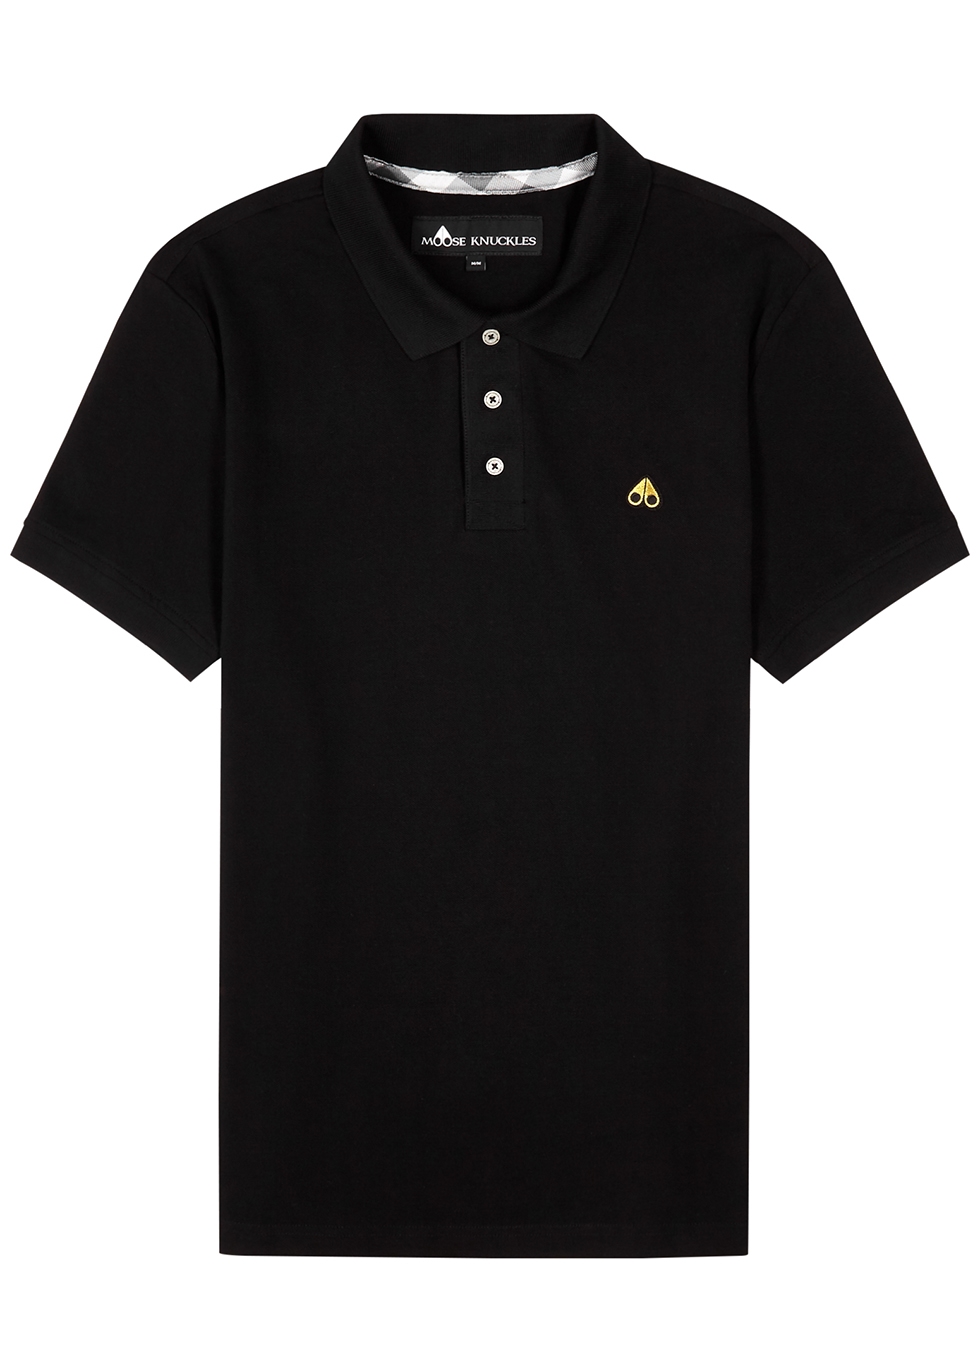 Moose Knuckles Black piqué cotton polo shirt